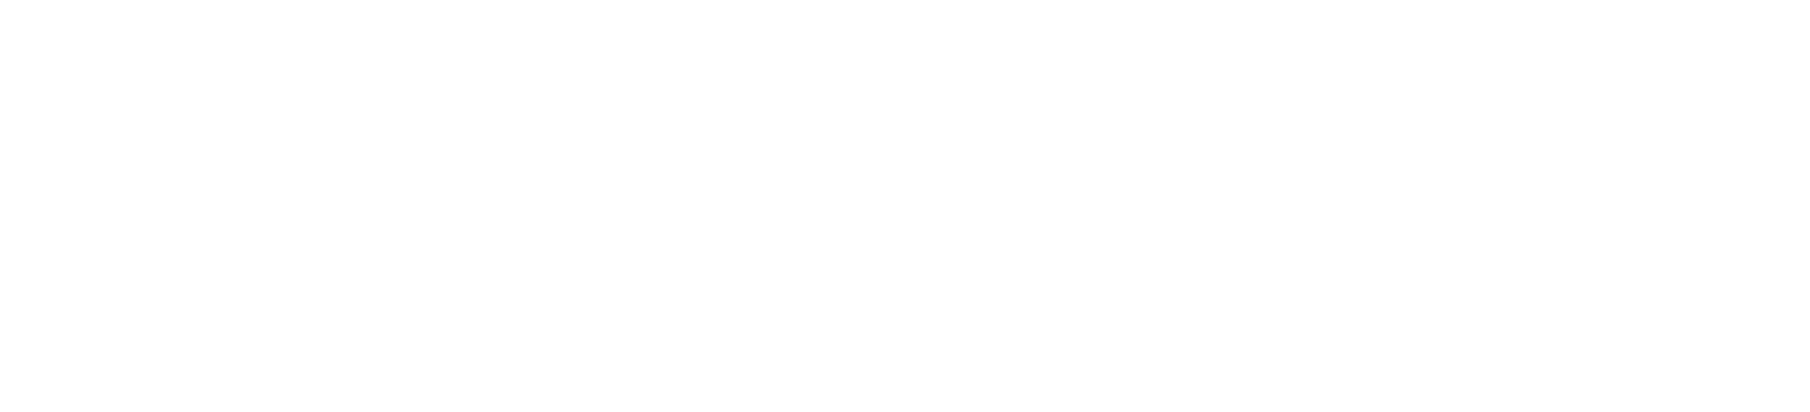 Hurtubise - Logo - Blanc